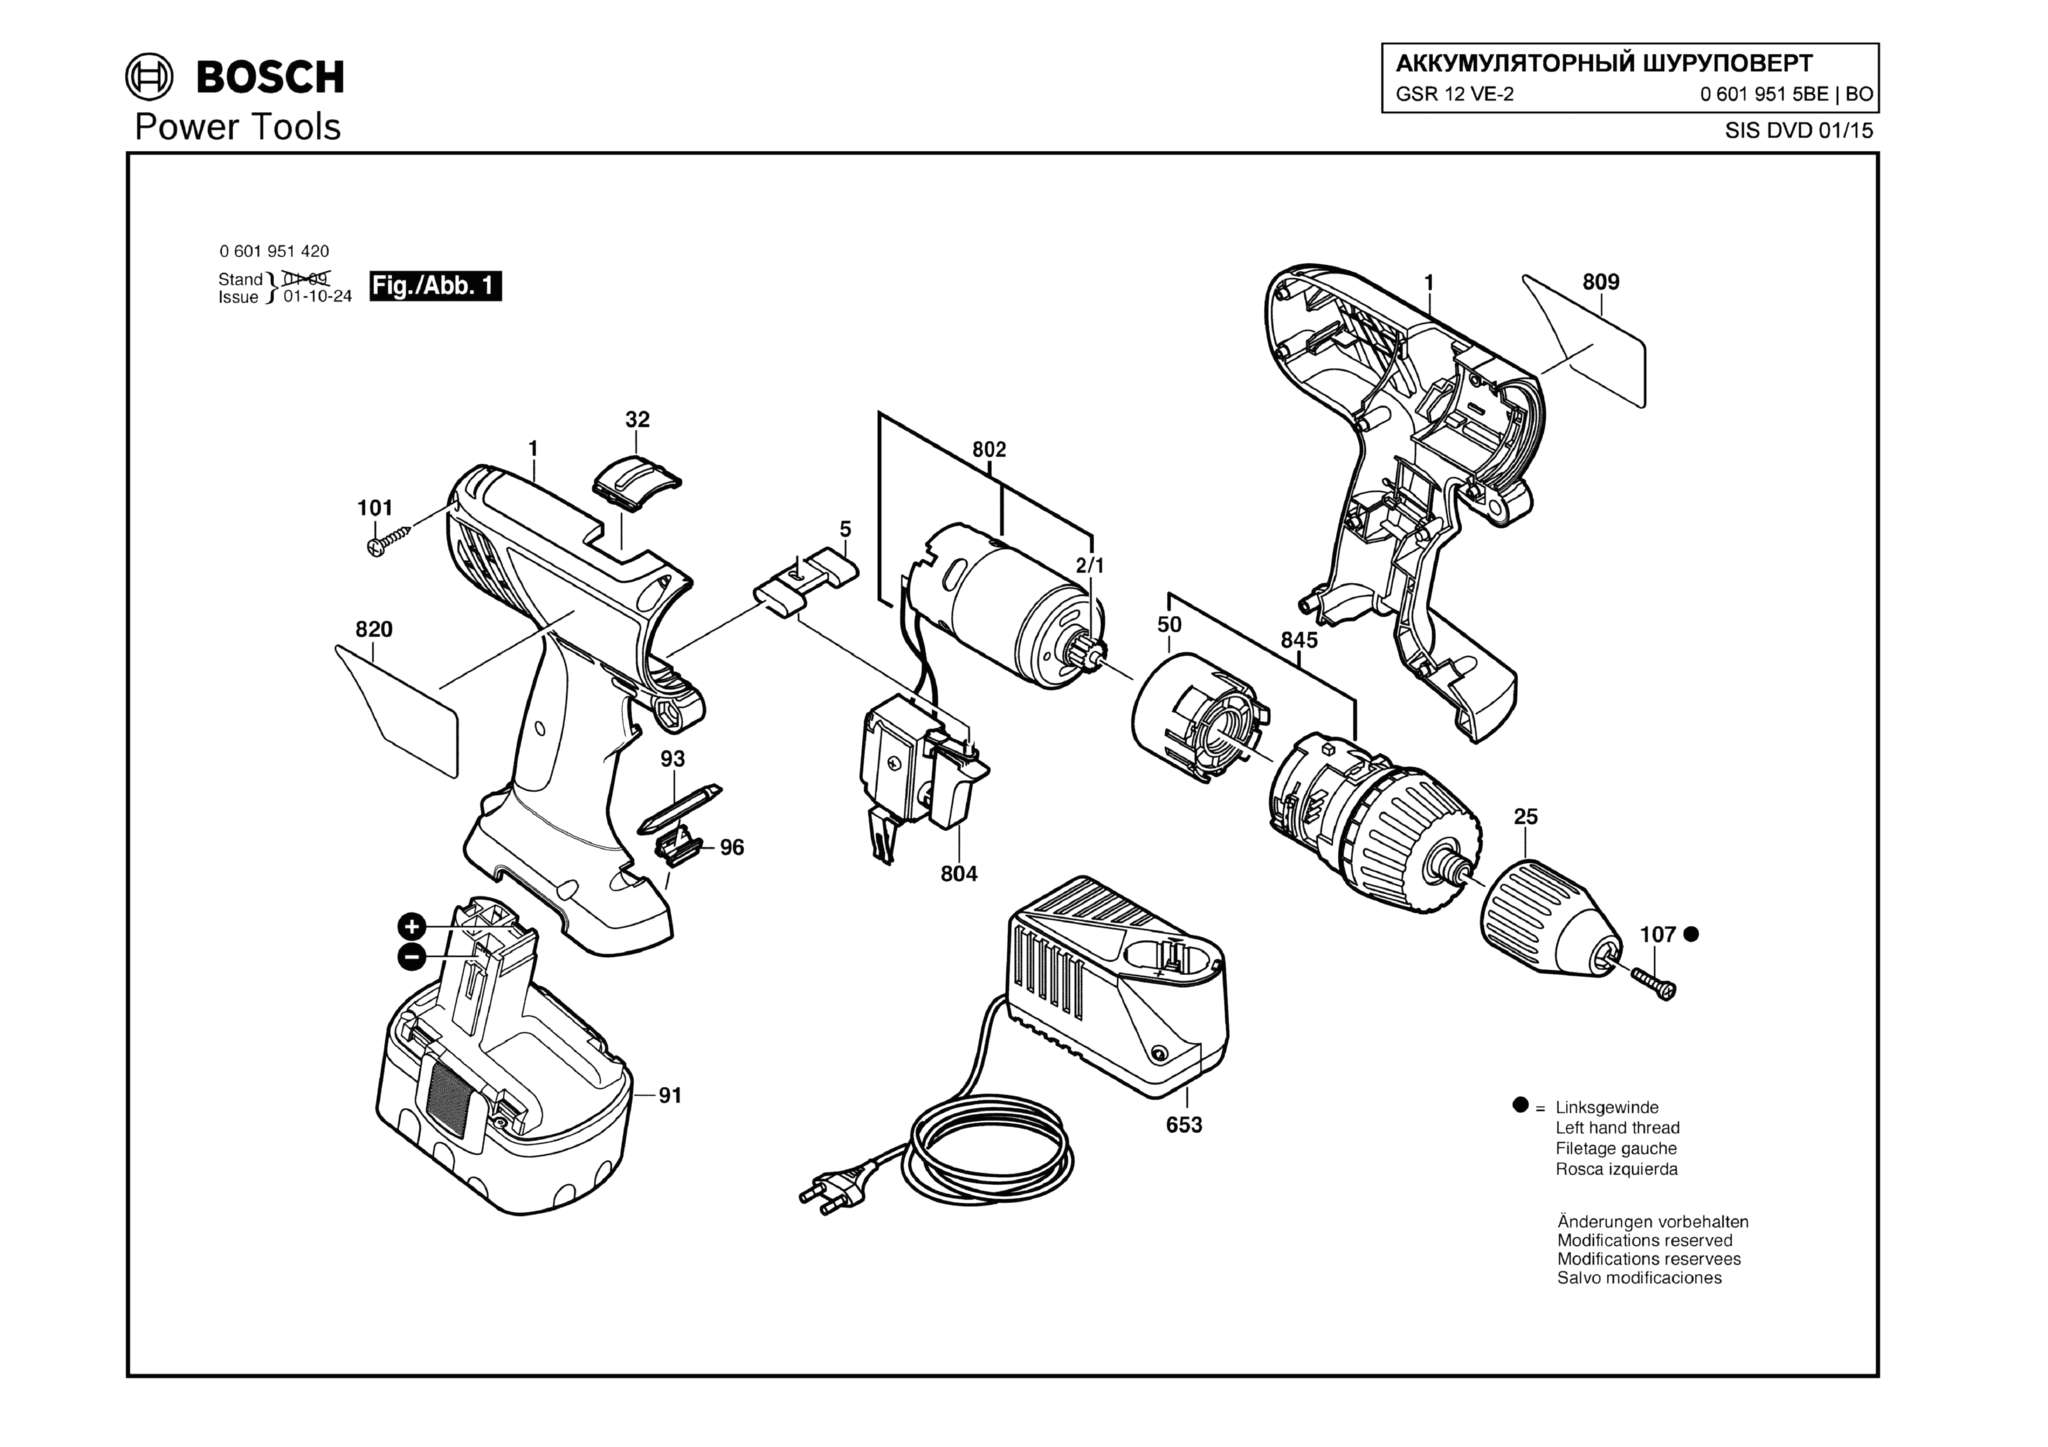 Запчасти, схема и деталировка Bosch GSR 12 VE-2 (ТИП 06019515BE)